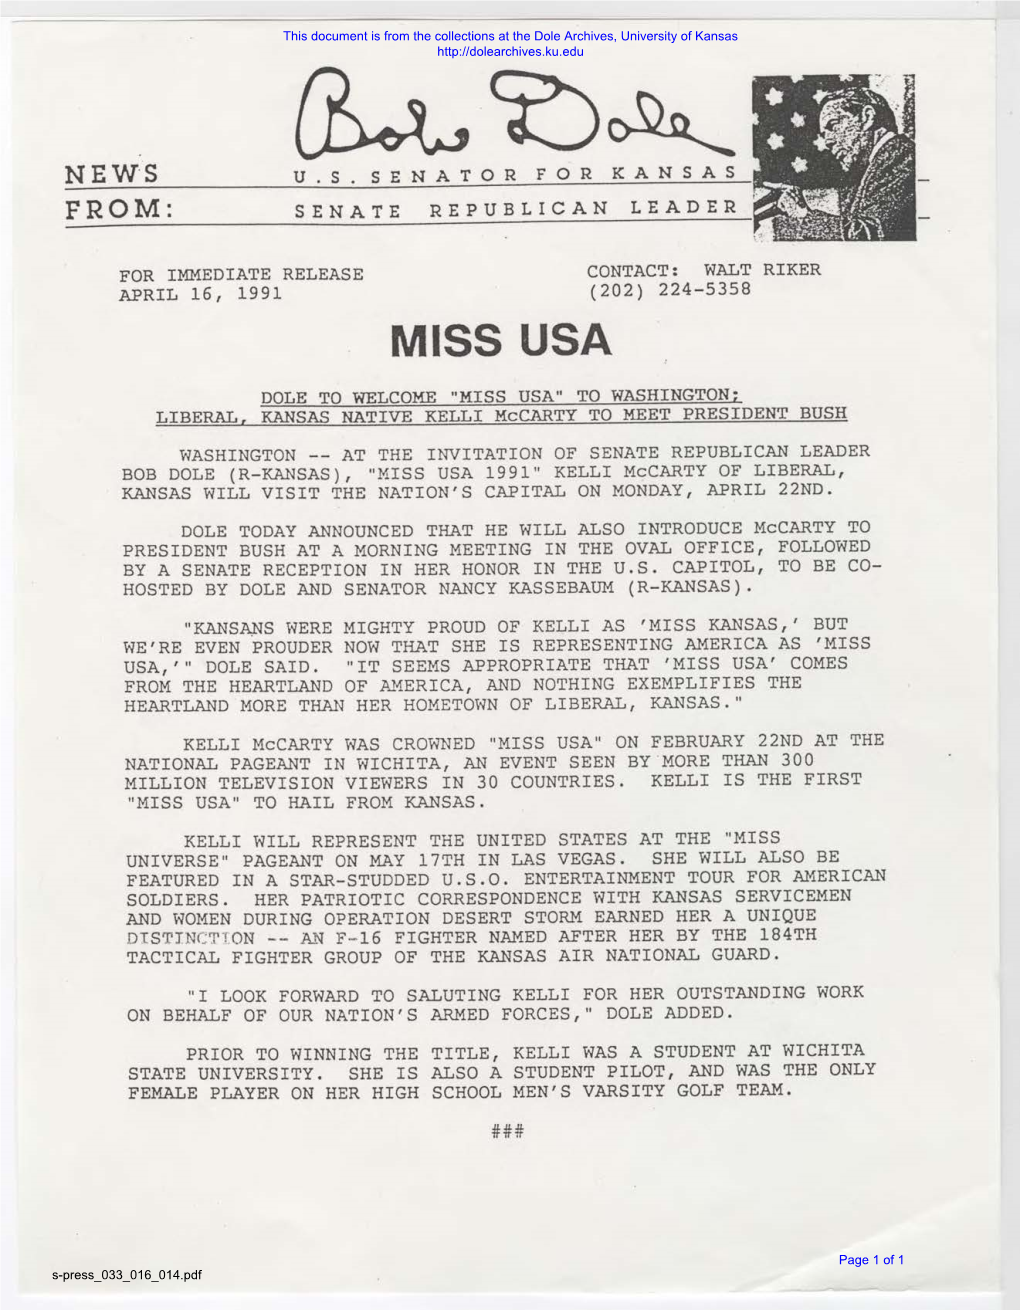 MISS USA DOLE to WELCOME "MISS USA" to WASHINGTON; LIBERAL, KANSAS NATIVE KELLI Mccarty to MEET PRESIDENT BUSH